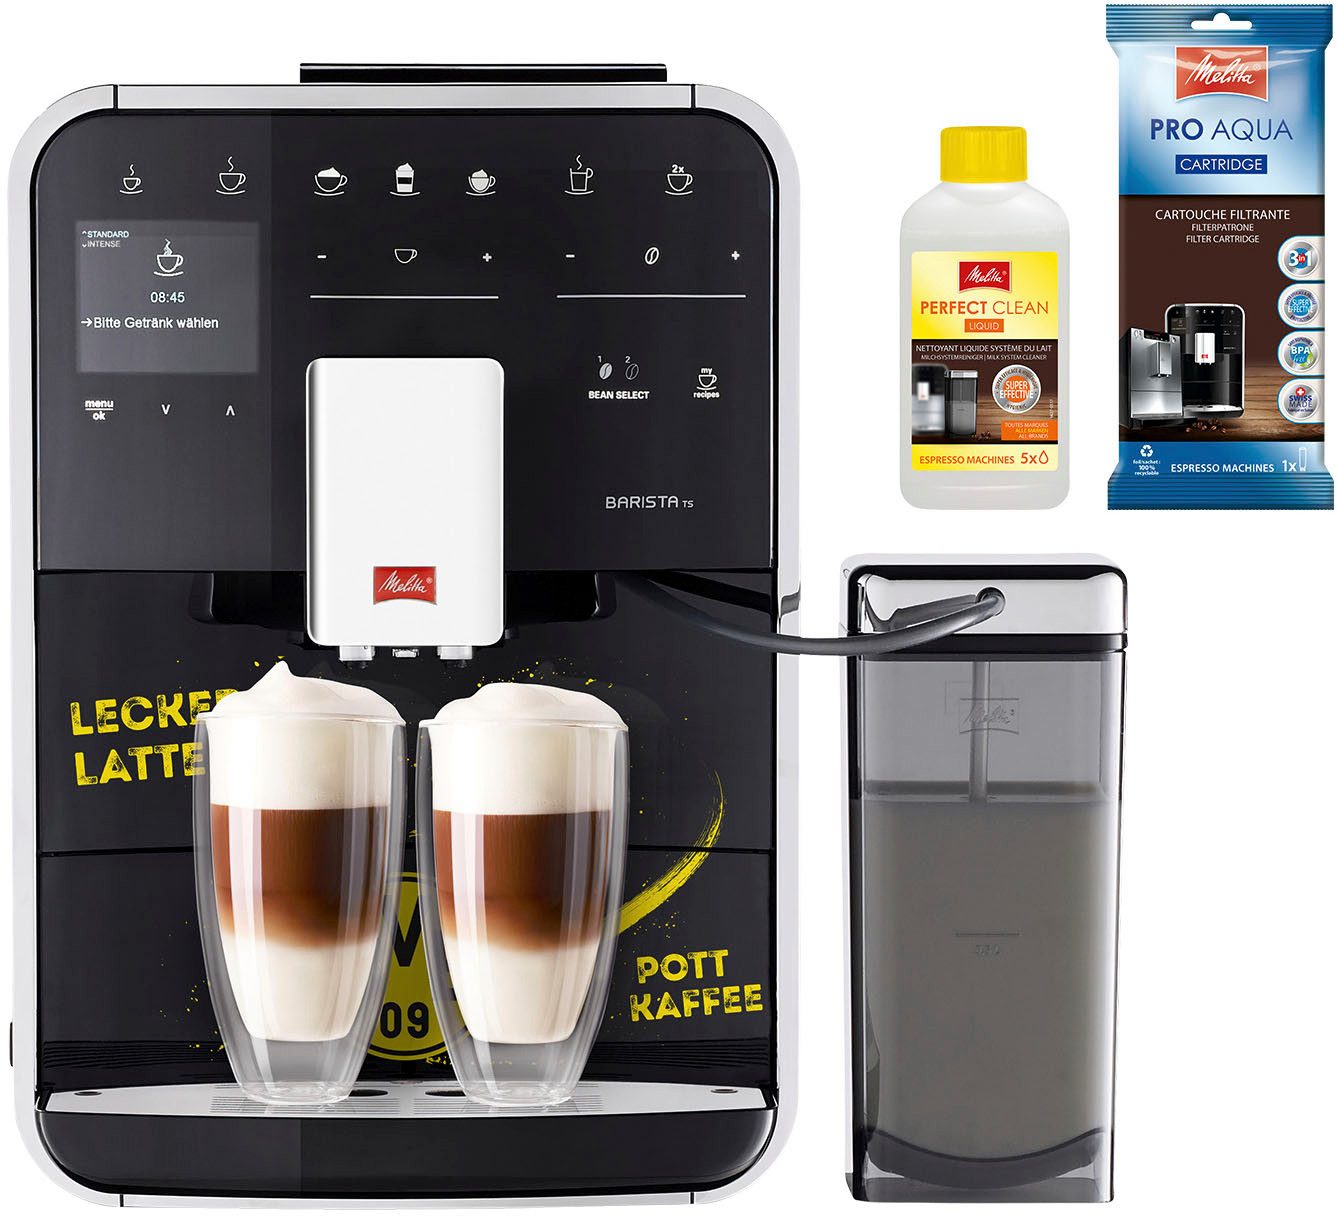 Melitta Kaffeevollautomat Barista TS Smart® BVB-Edition, Für Fans des Borussia Dortmund, 21 Kaffeerezepte & 8 Benutzerprofile